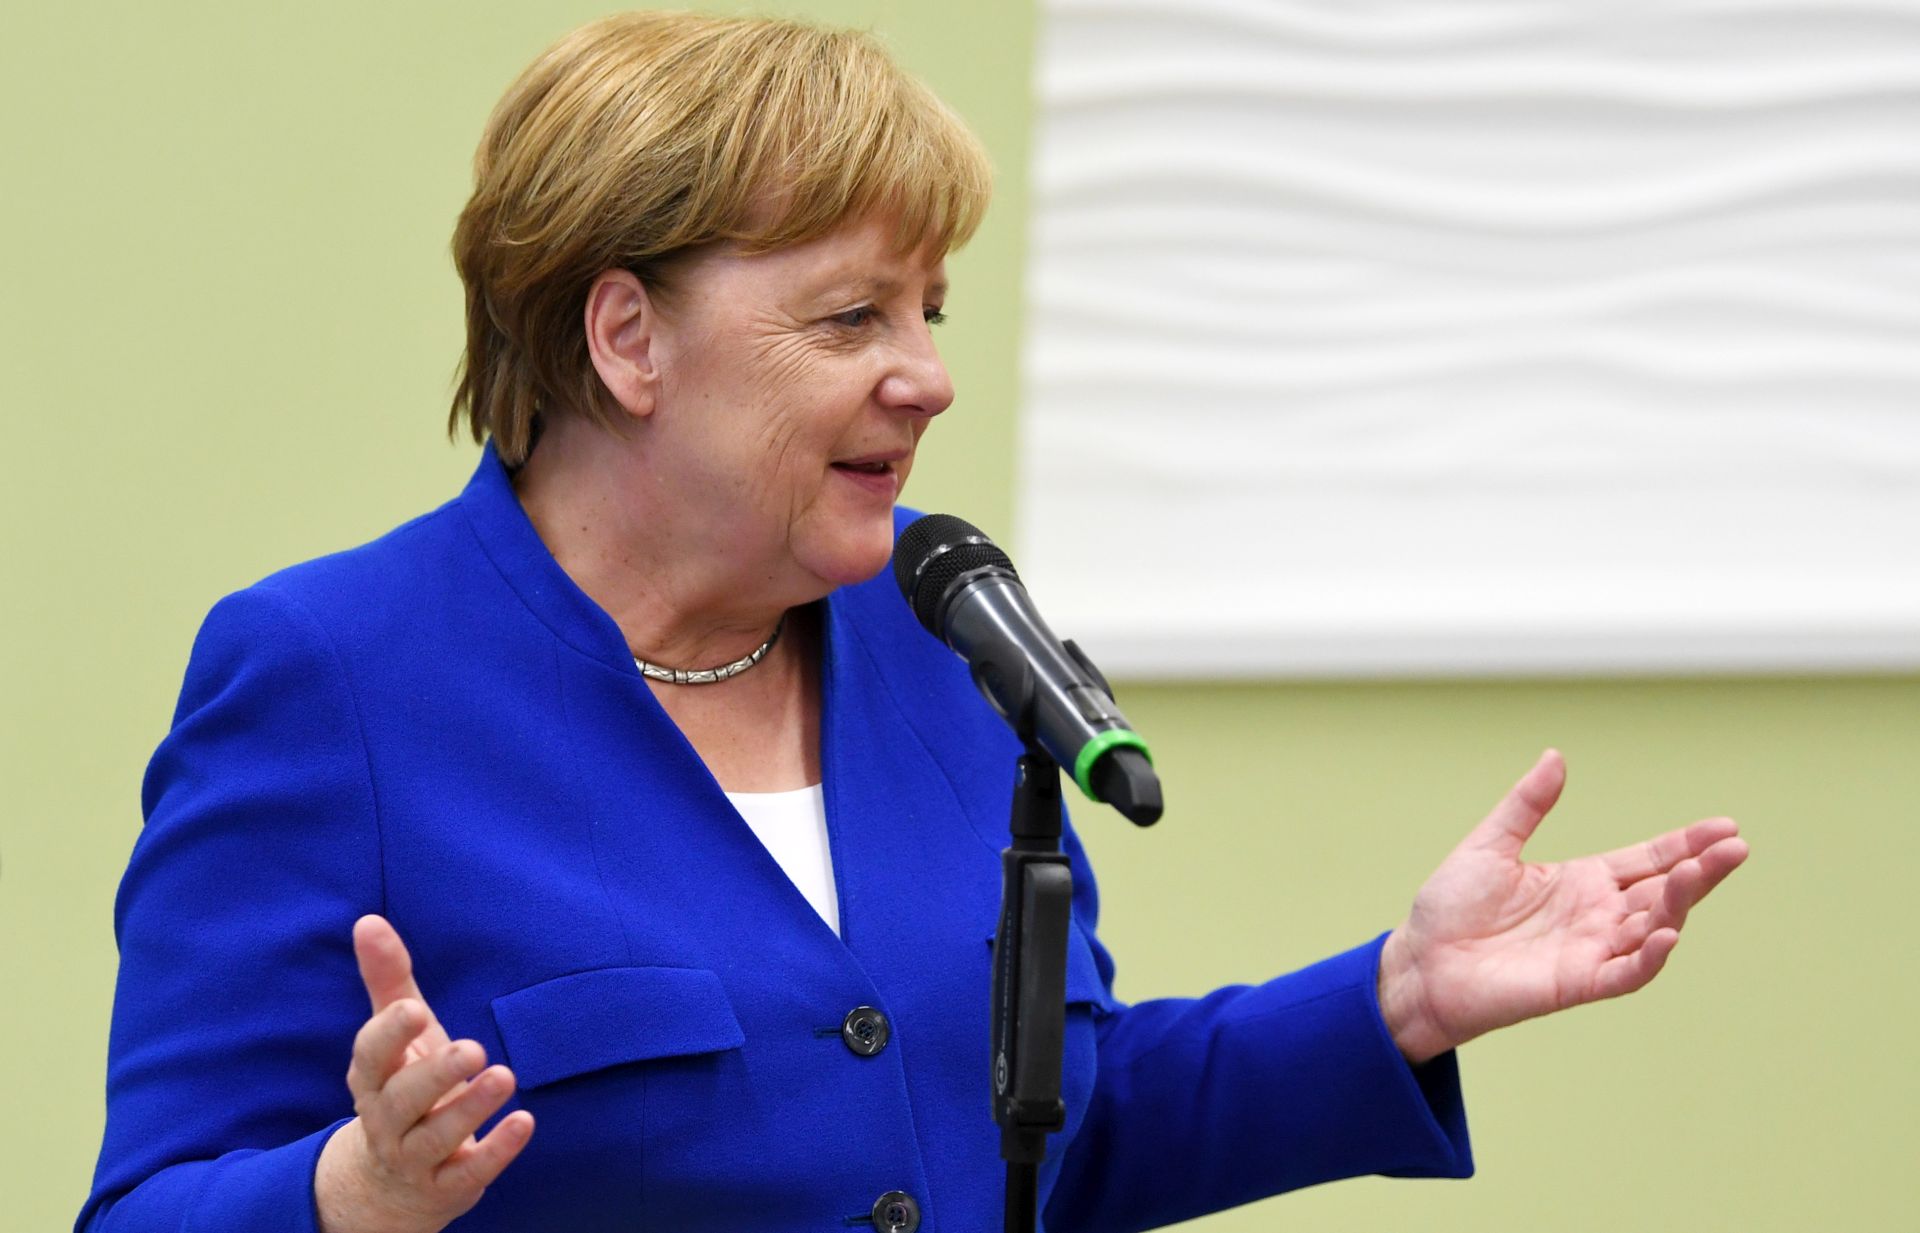 epa07719118 German Chancellor Angela Merkel gives a statement after her visit to the Siemens plant in Goerlitz, Germany, 15 July 2019.  EPA/FILIP SINGER